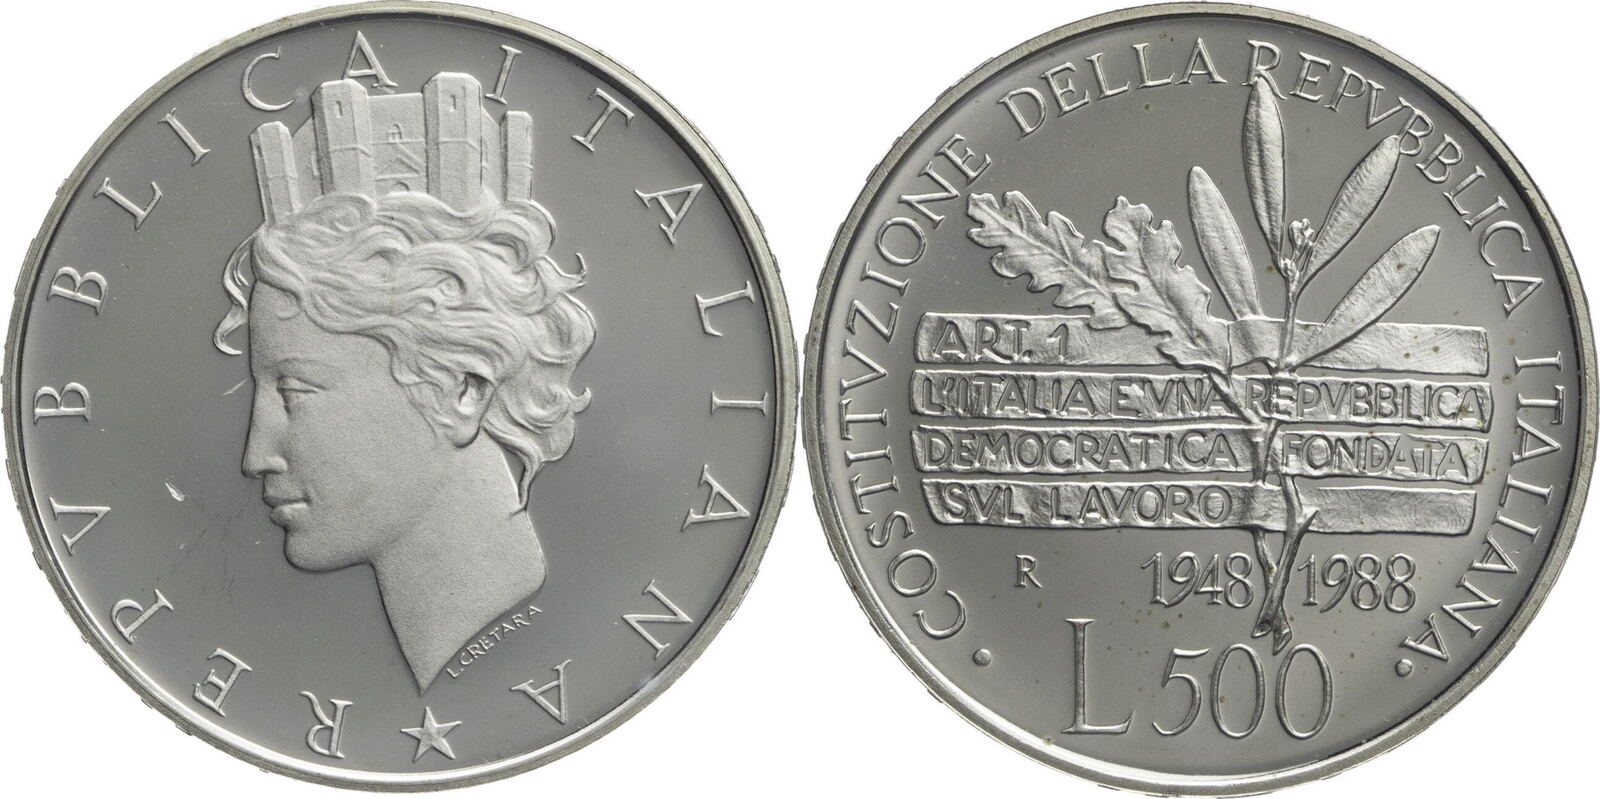 Since 1946. 500 Лир Proof Италия серебро.